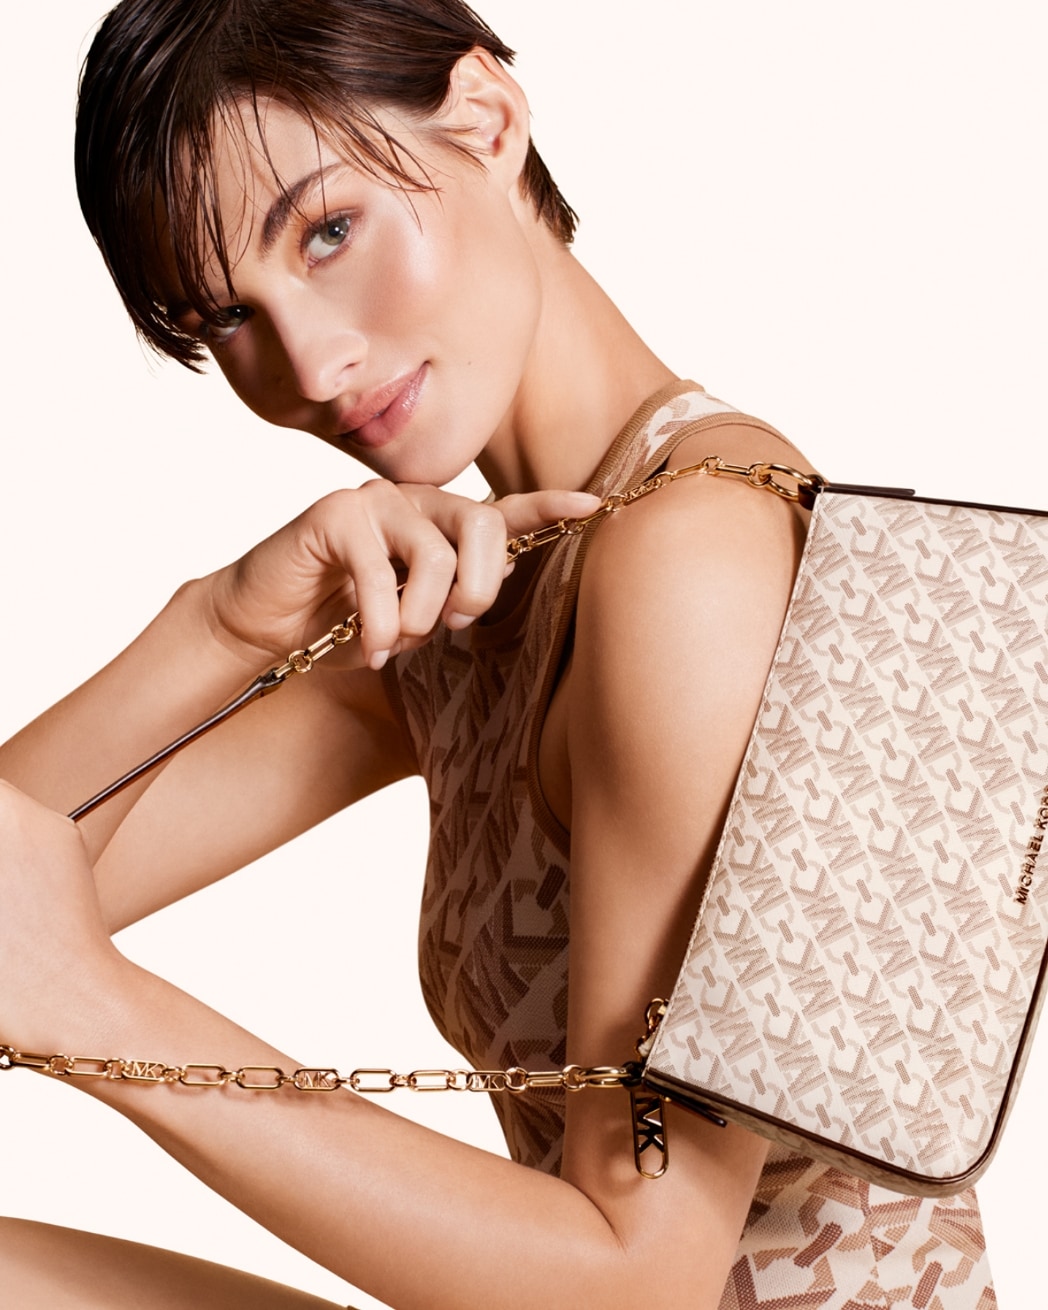 Designer Handbags & Luxury Bags |